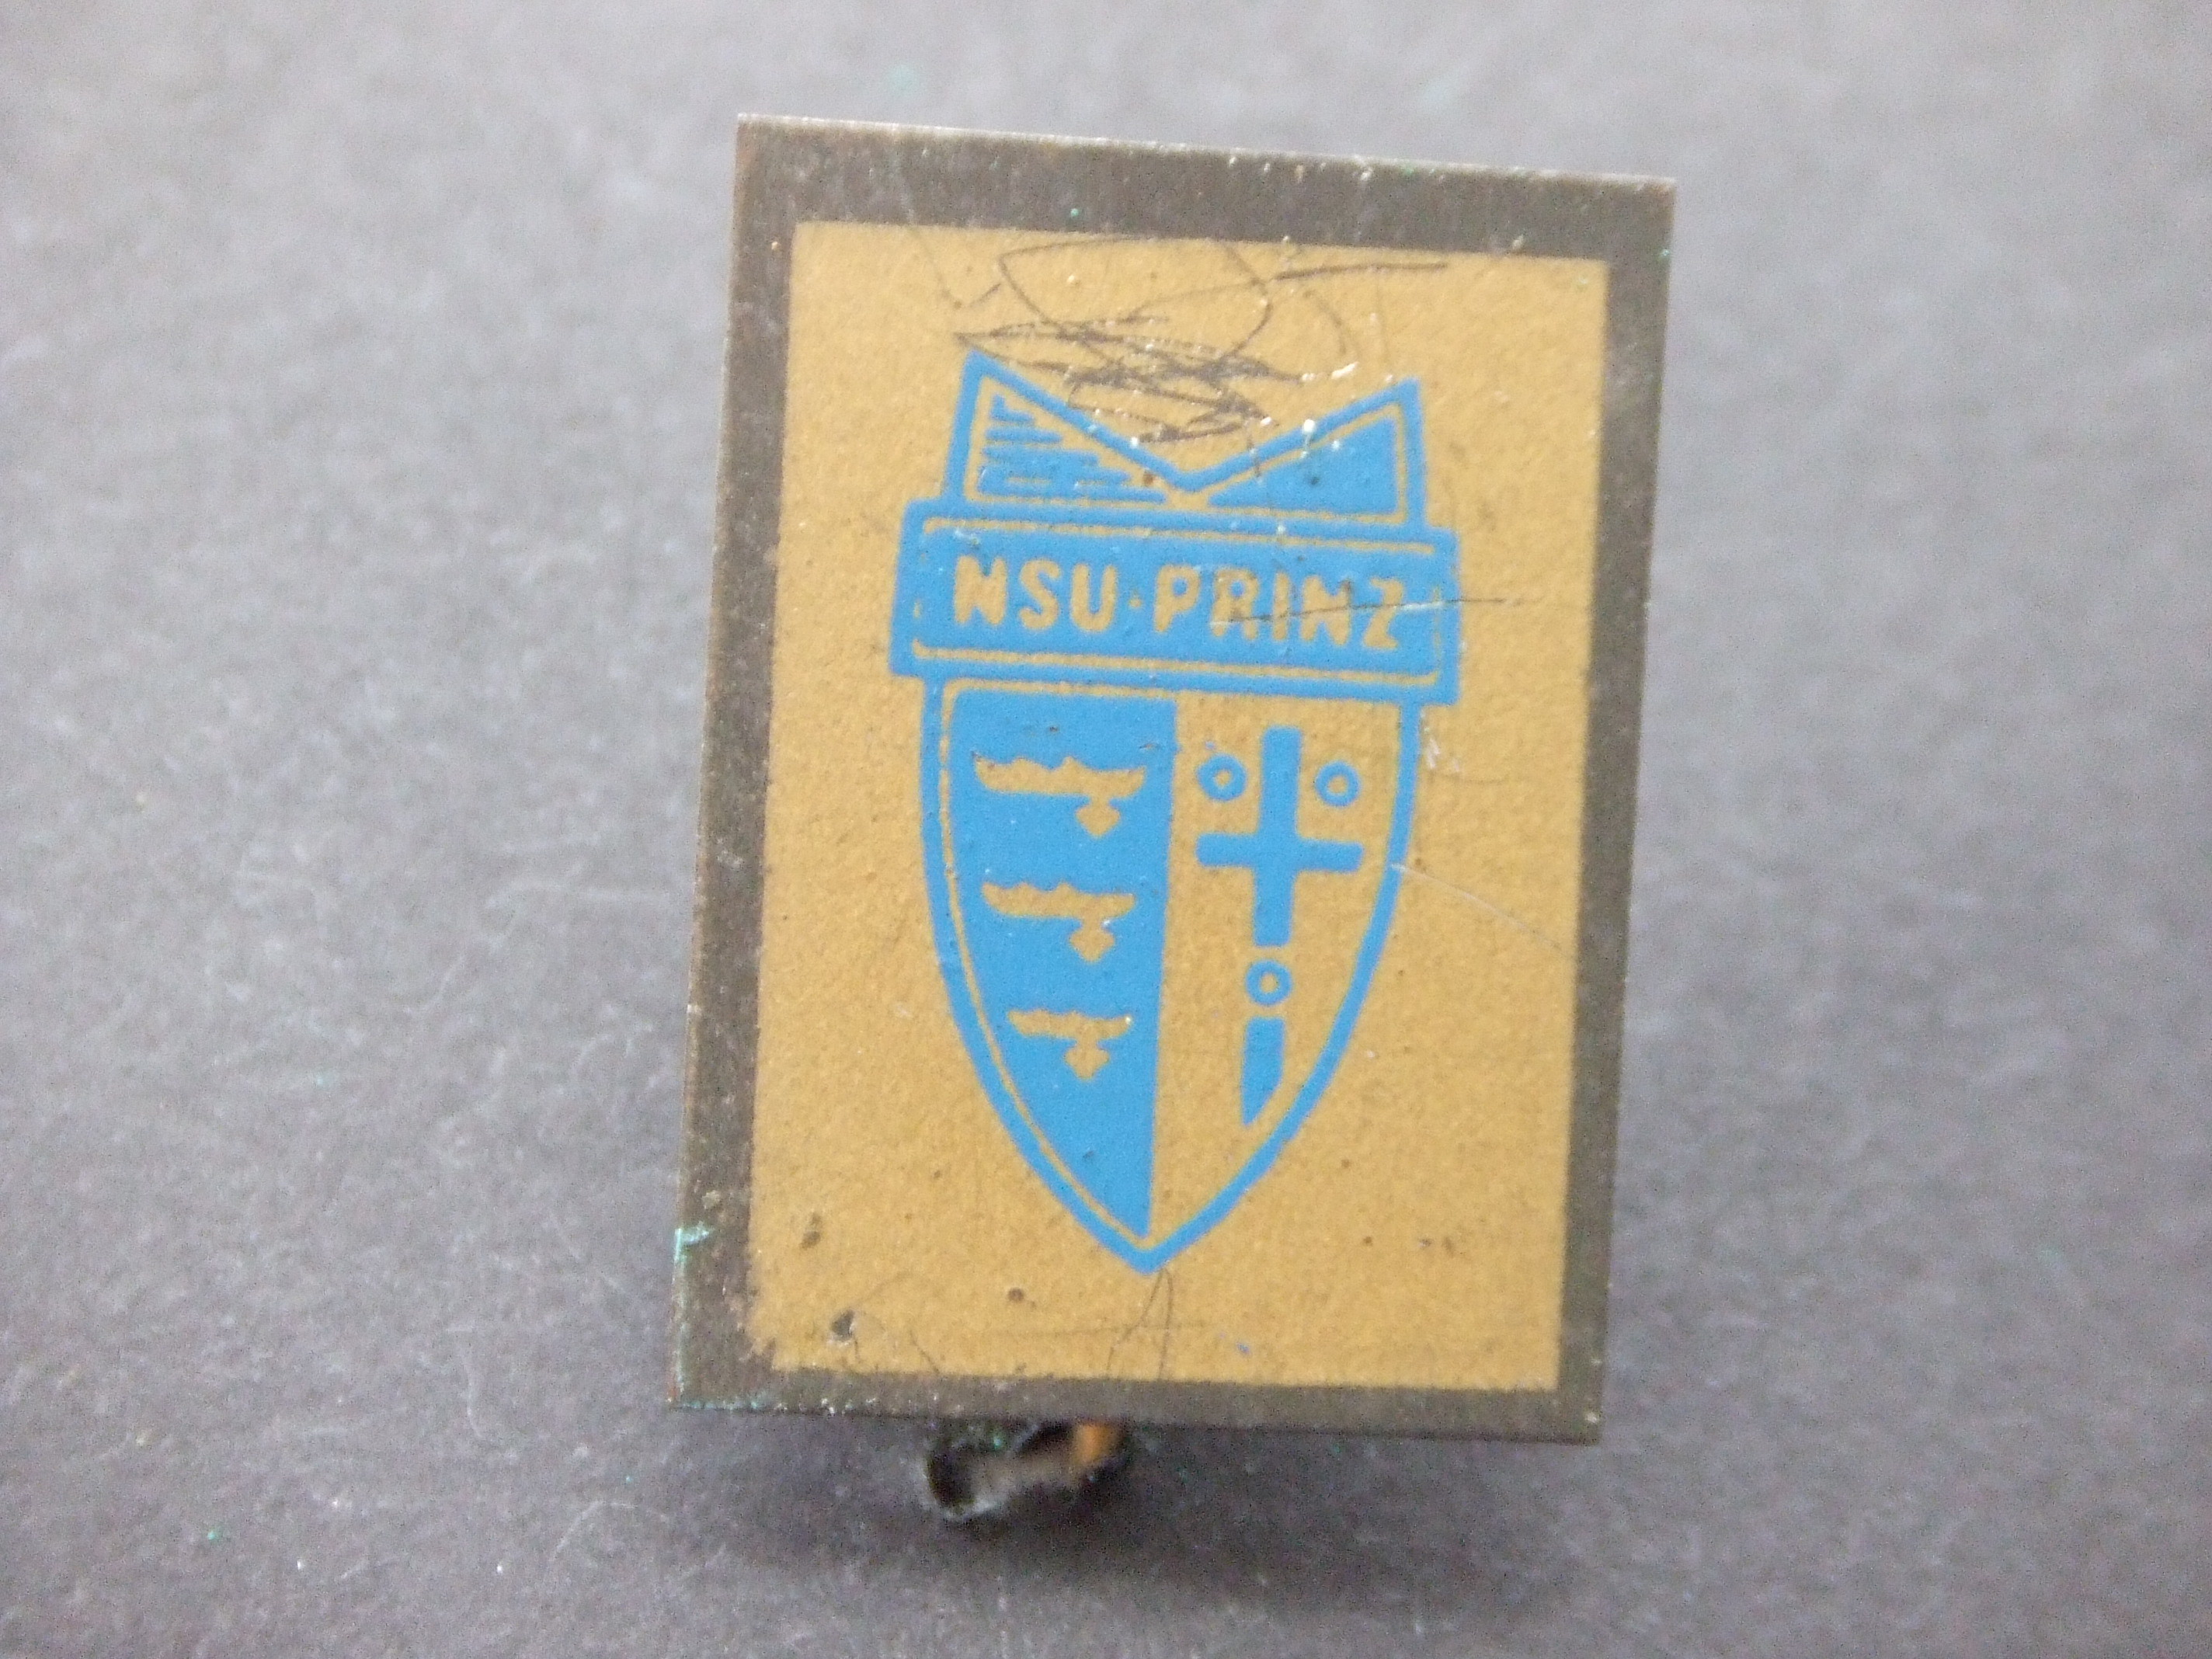 NSU prinz logo Duitse automerk logo oud